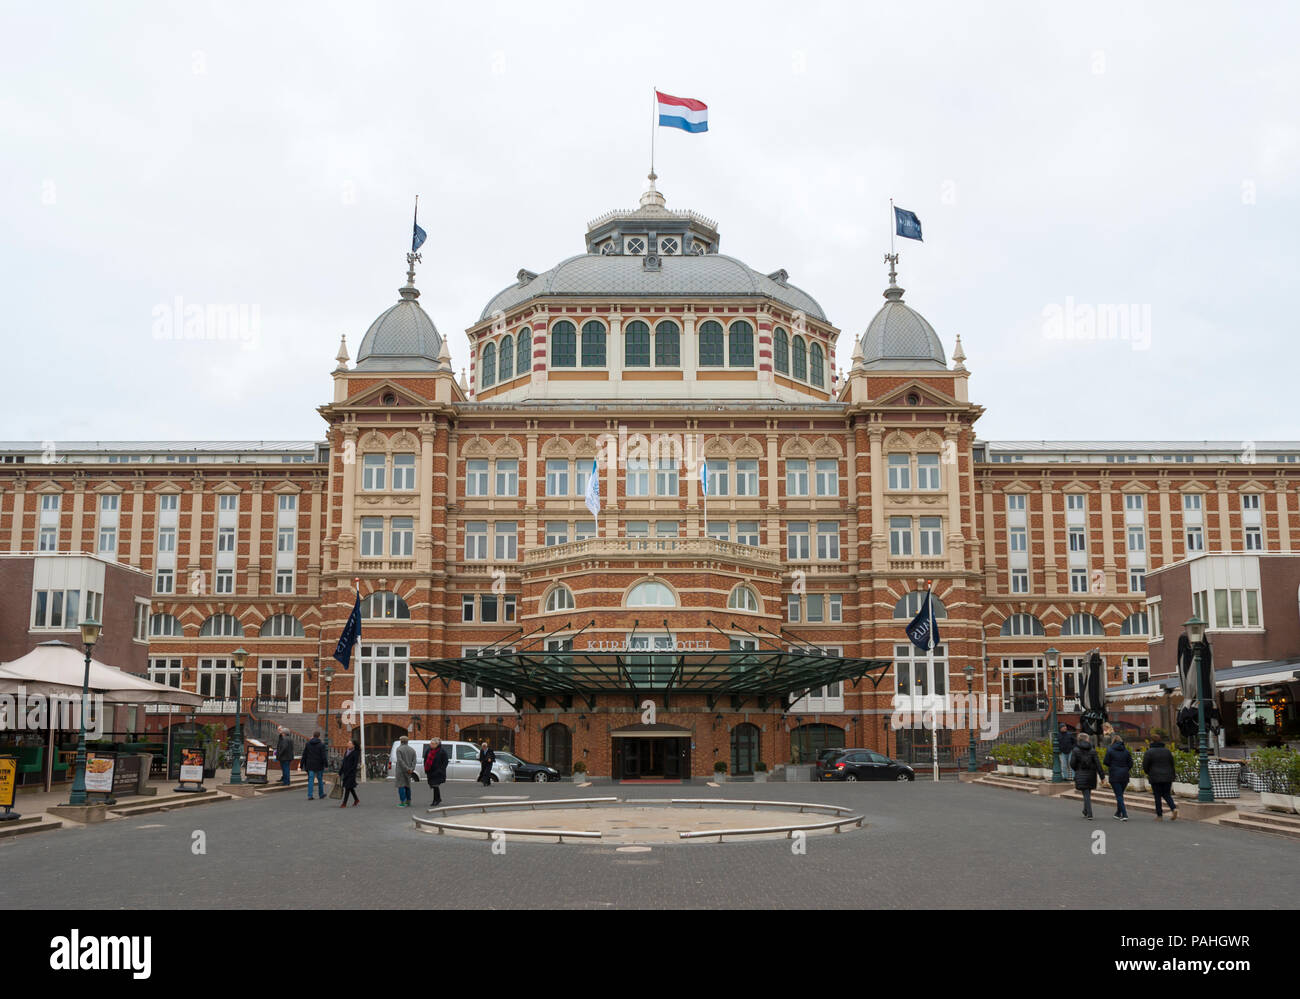 Main entrance to the Grand Hotel Amrâth Kurhaus, Scheveningen, The Hague, Netherlands Stock Photo